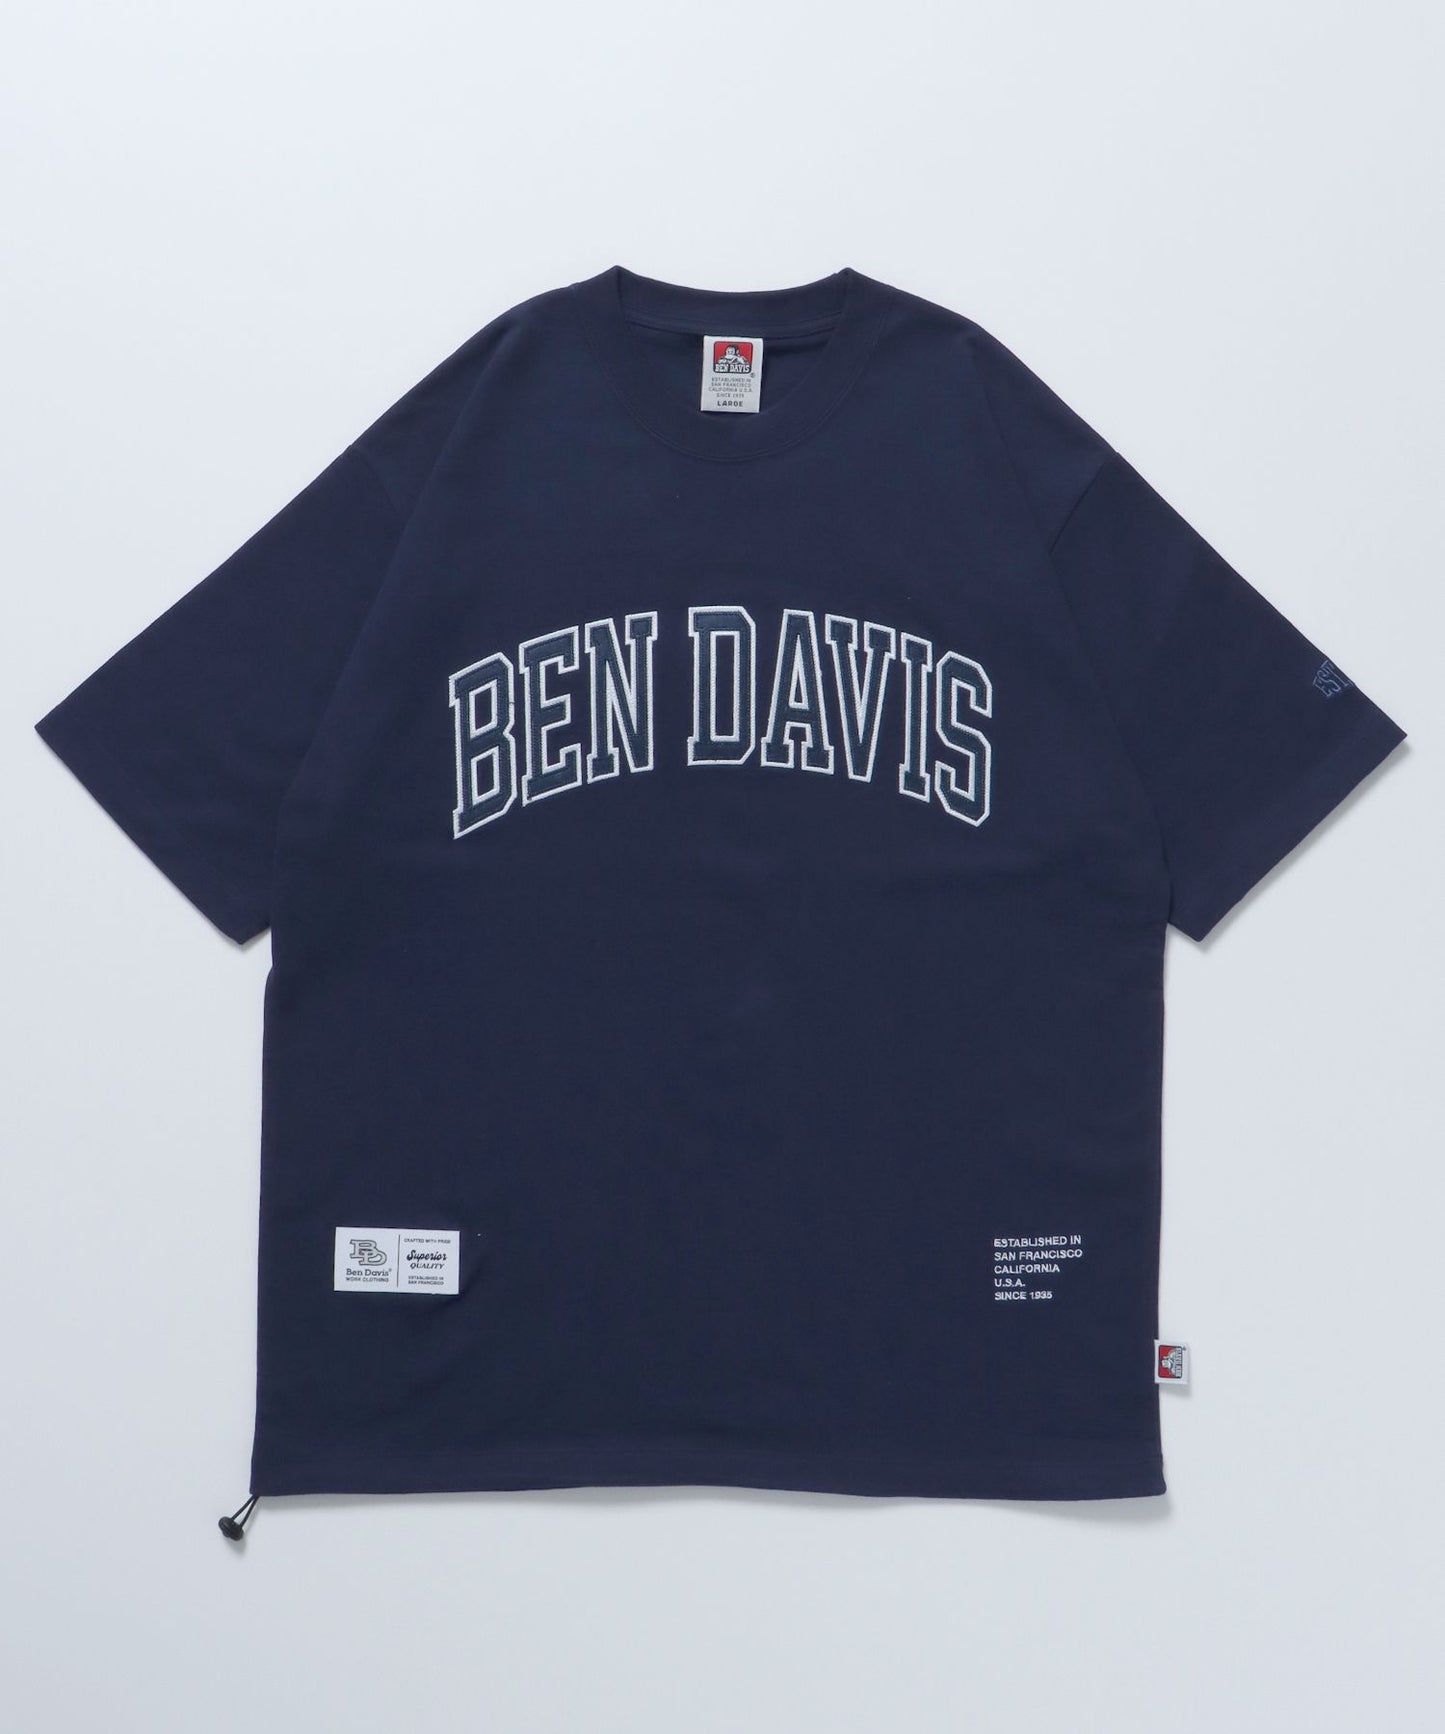 【BEN DAVIS(ベンデイビス)】LETTERED ATHLE TEE / ドローコード 半袖Tシャツ ロゴ刺繍 クルーネック オーバーサイズ ブランドロゴ フロント ダークネイビー